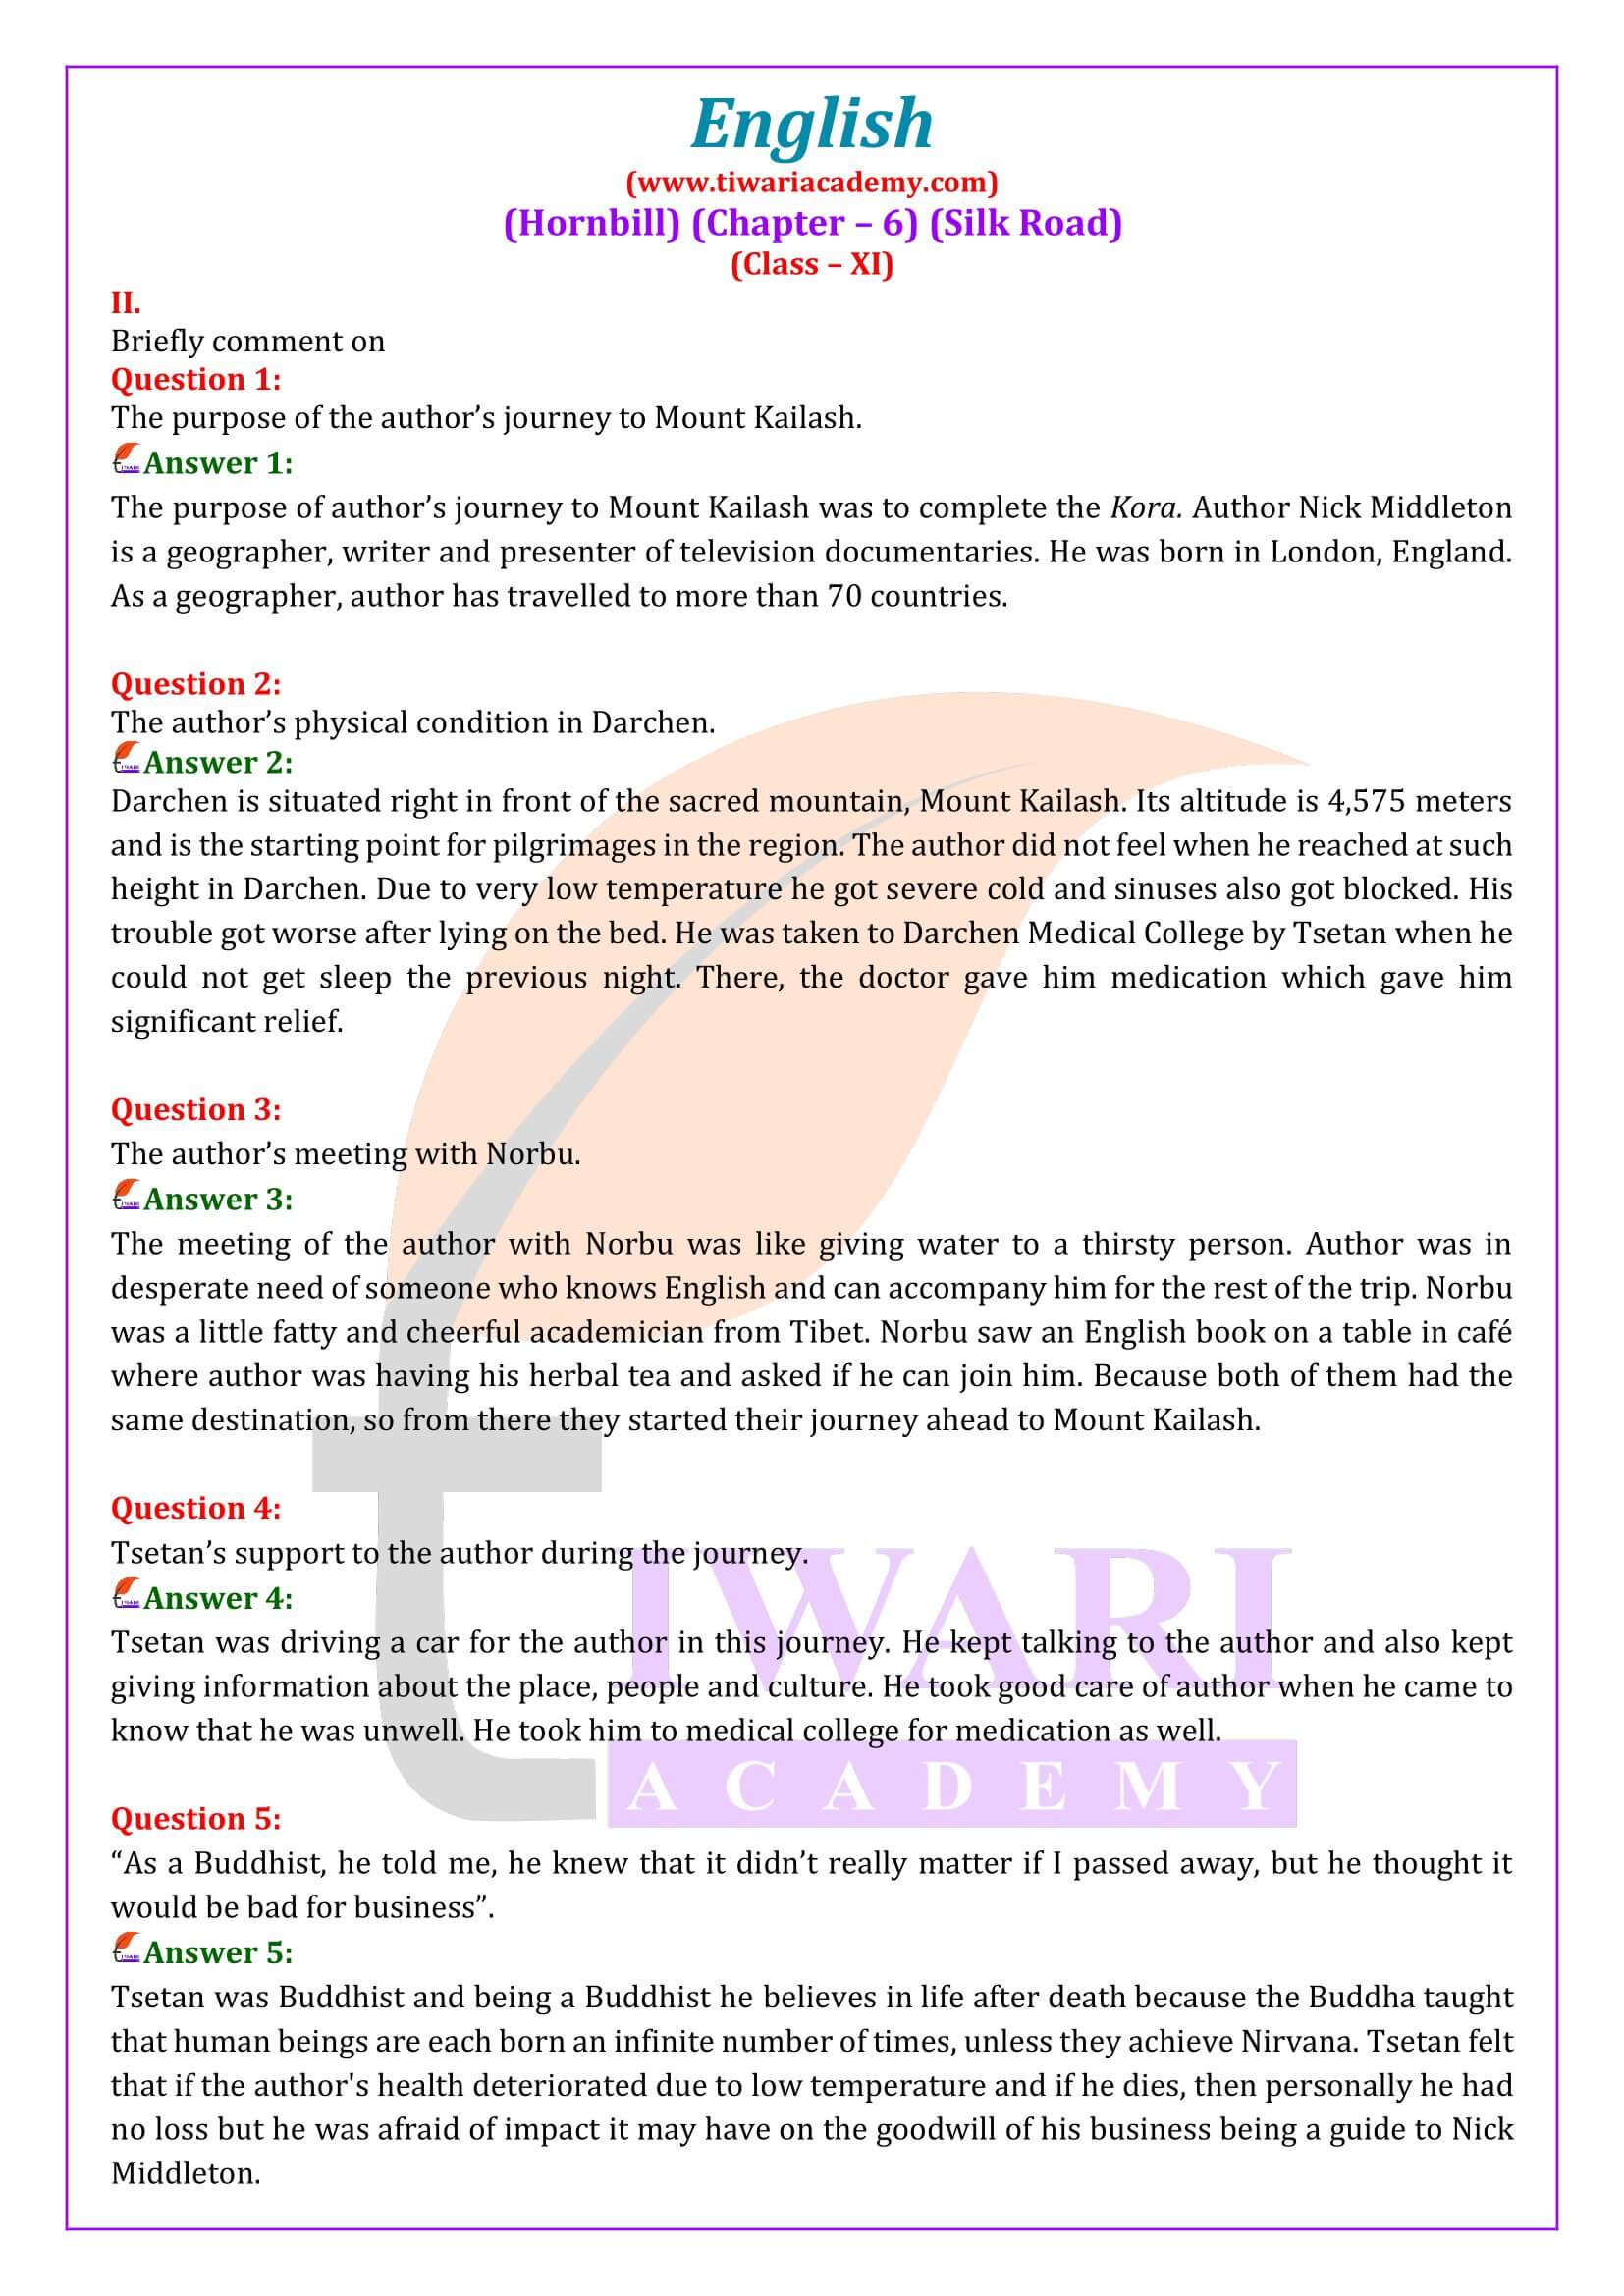 NCERT Solutions for Class 11 English Hornbill Chapter 6